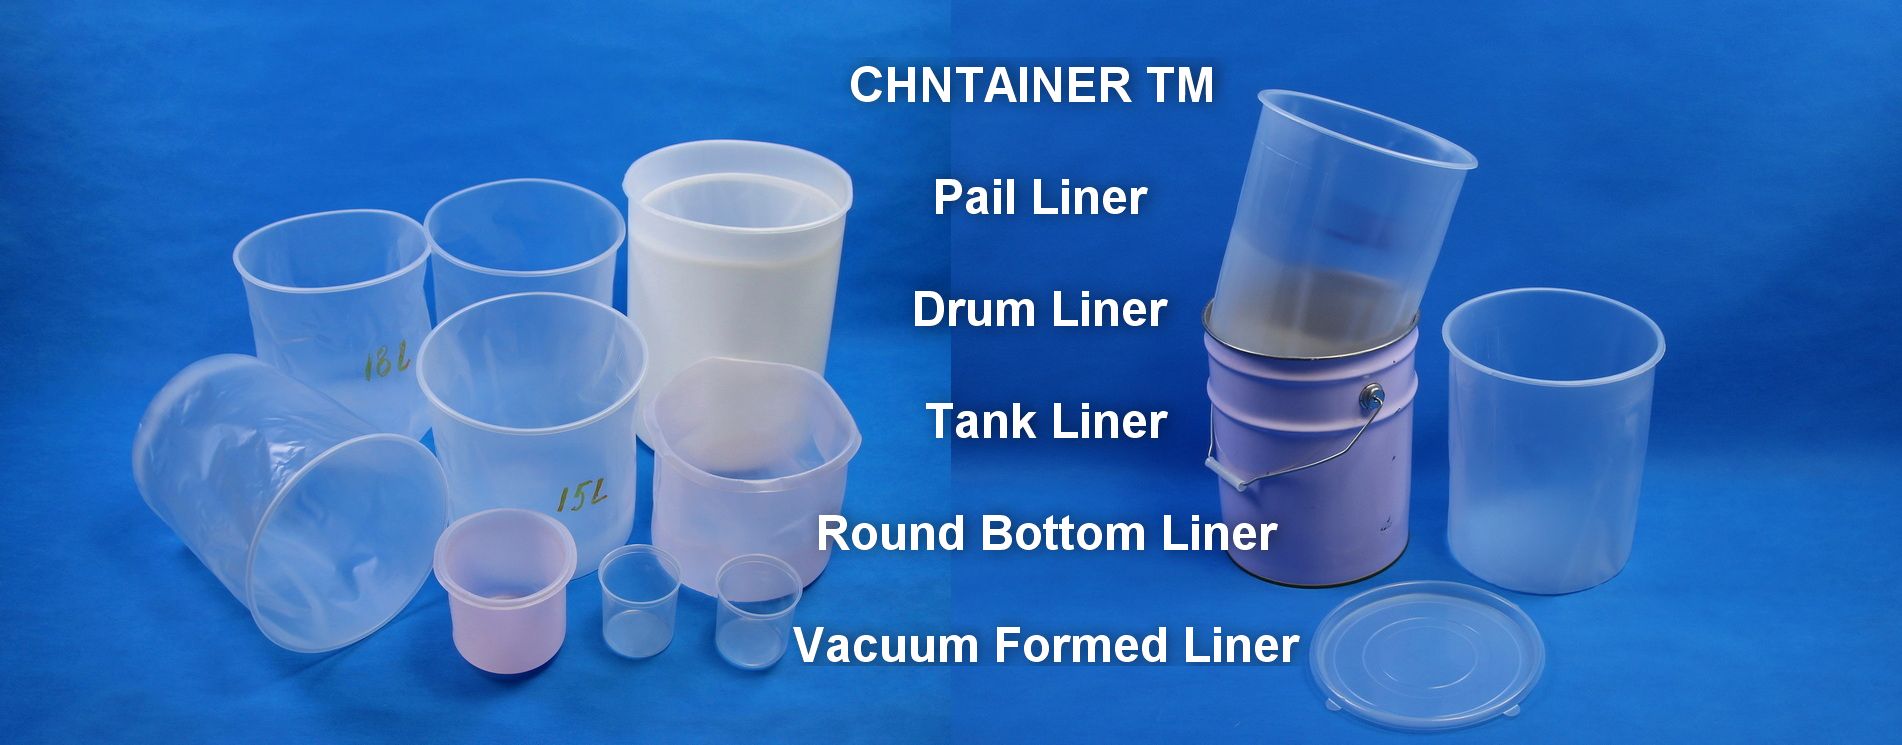 chntainer_pail_liner_drum_liner_tank_liner_cfdplas_001